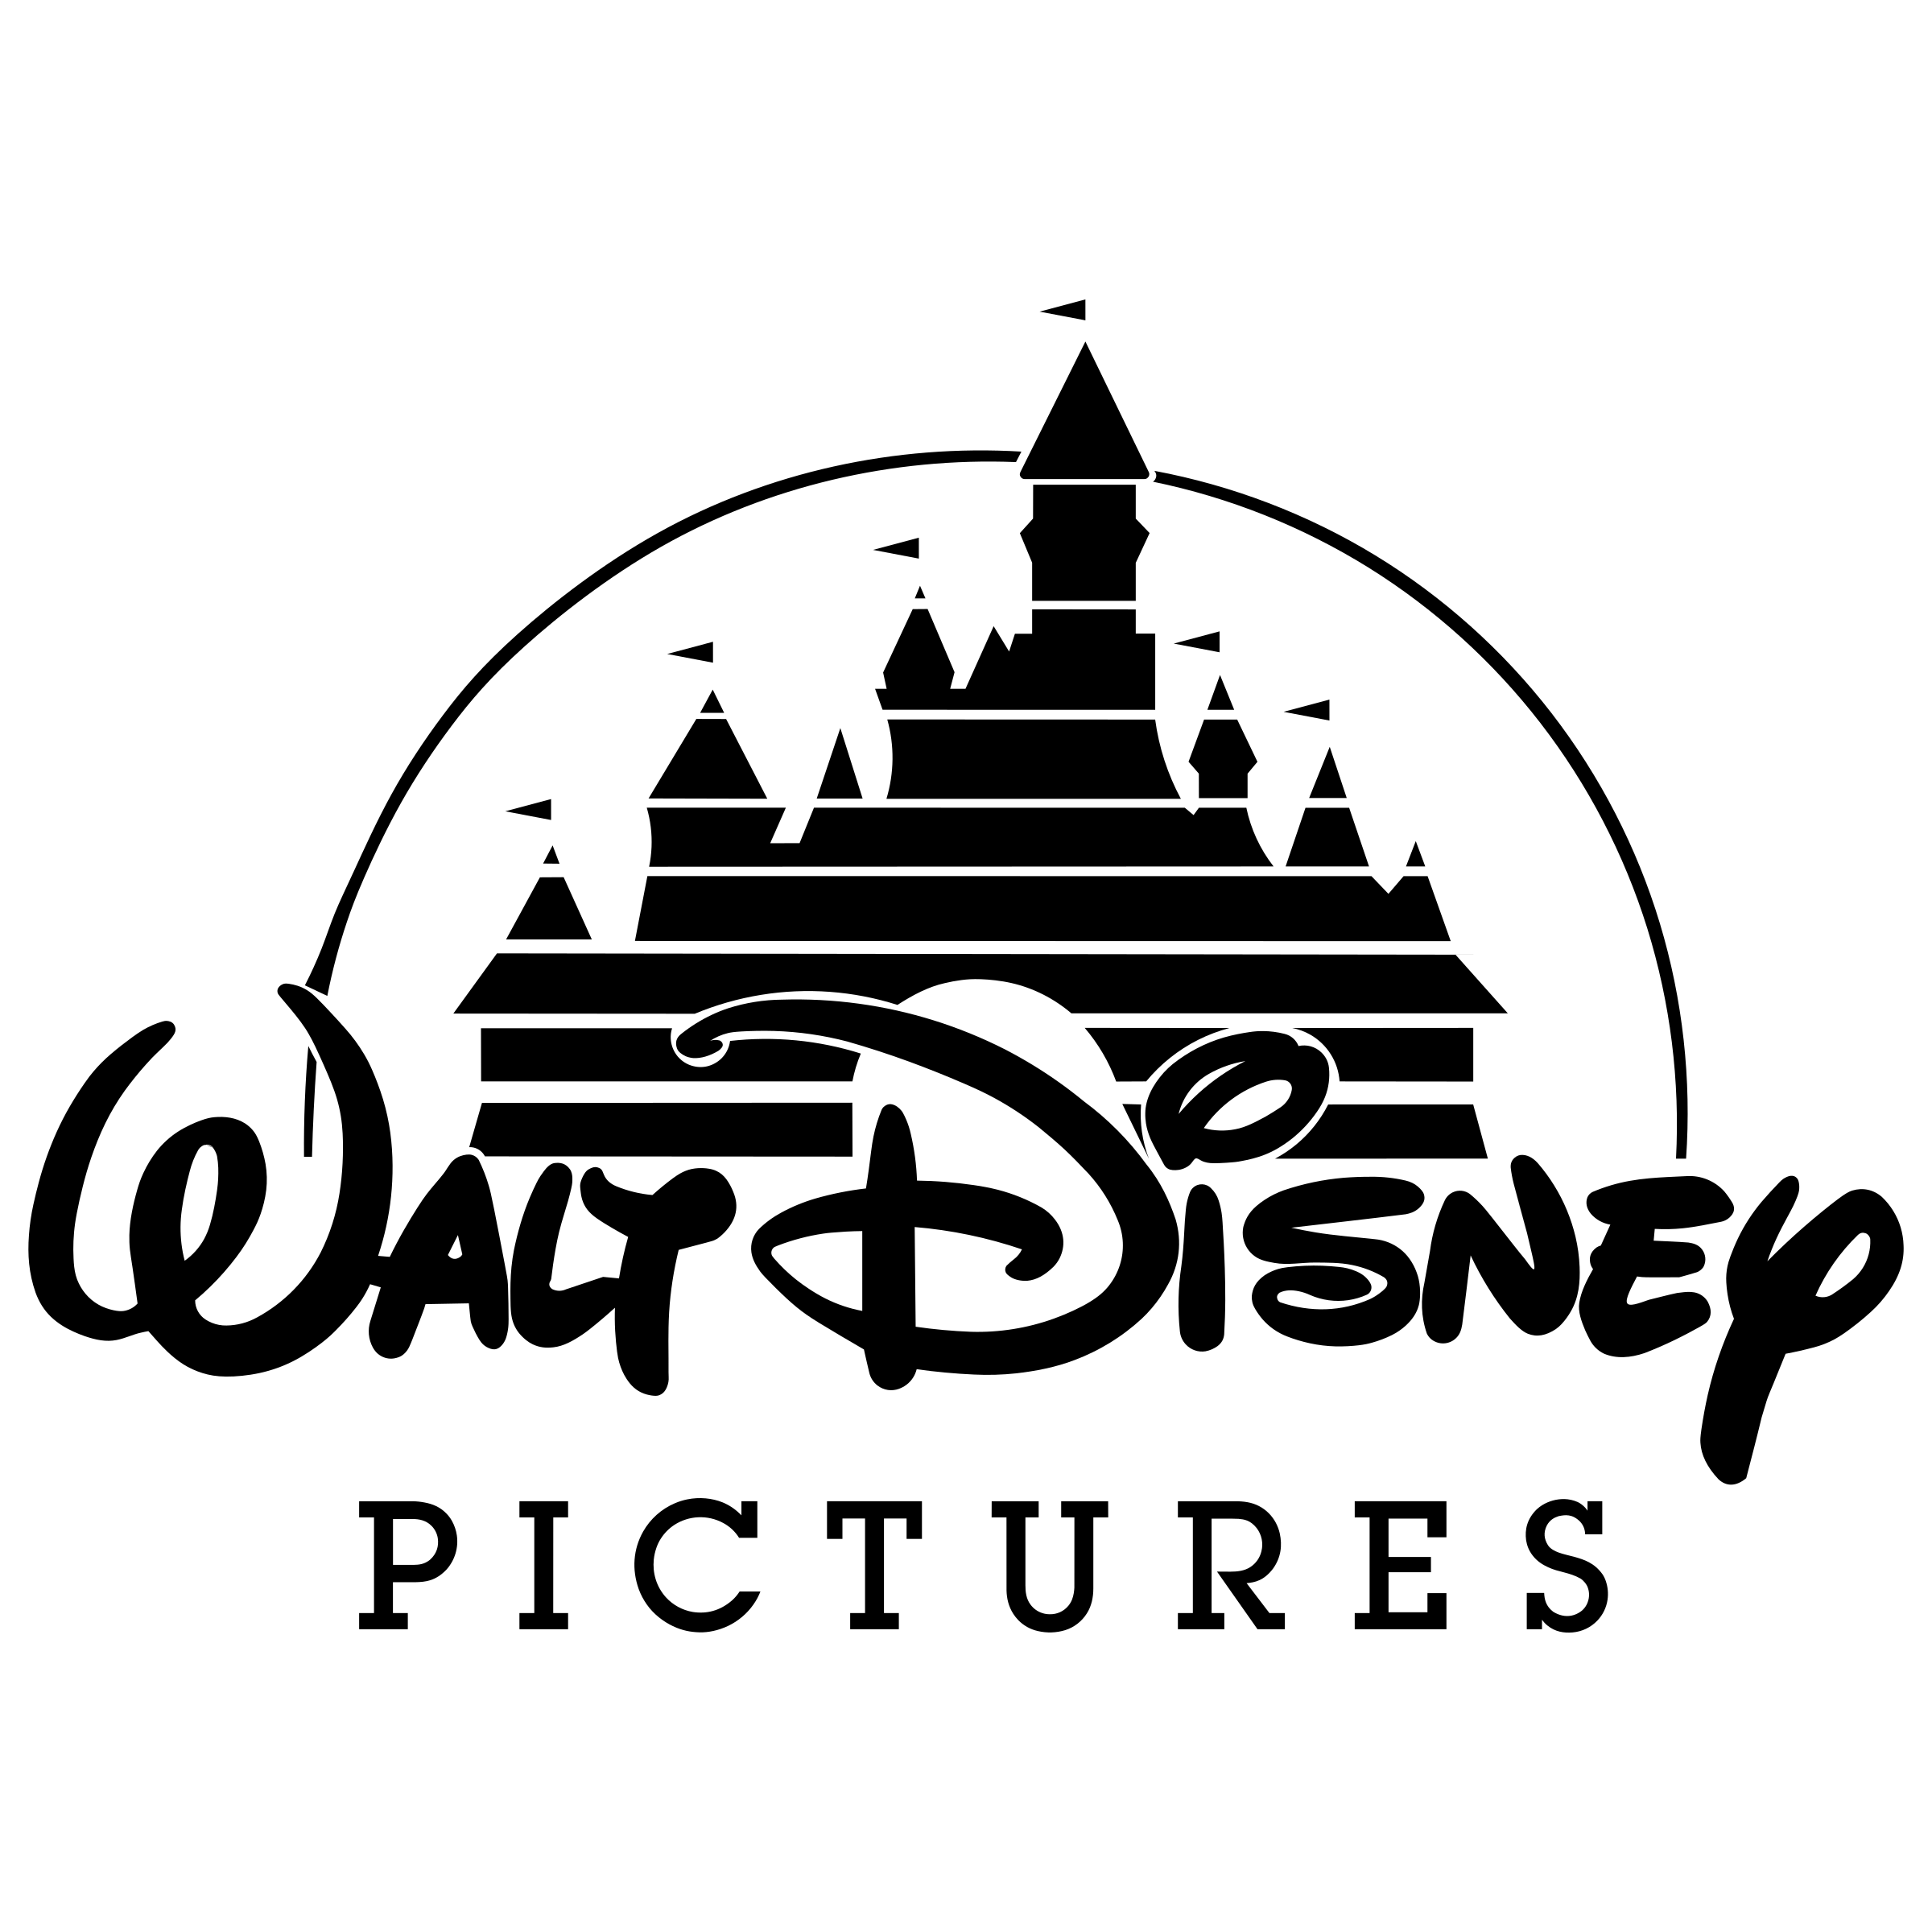 Logotipo da Disney Castle Baixar PNG Image